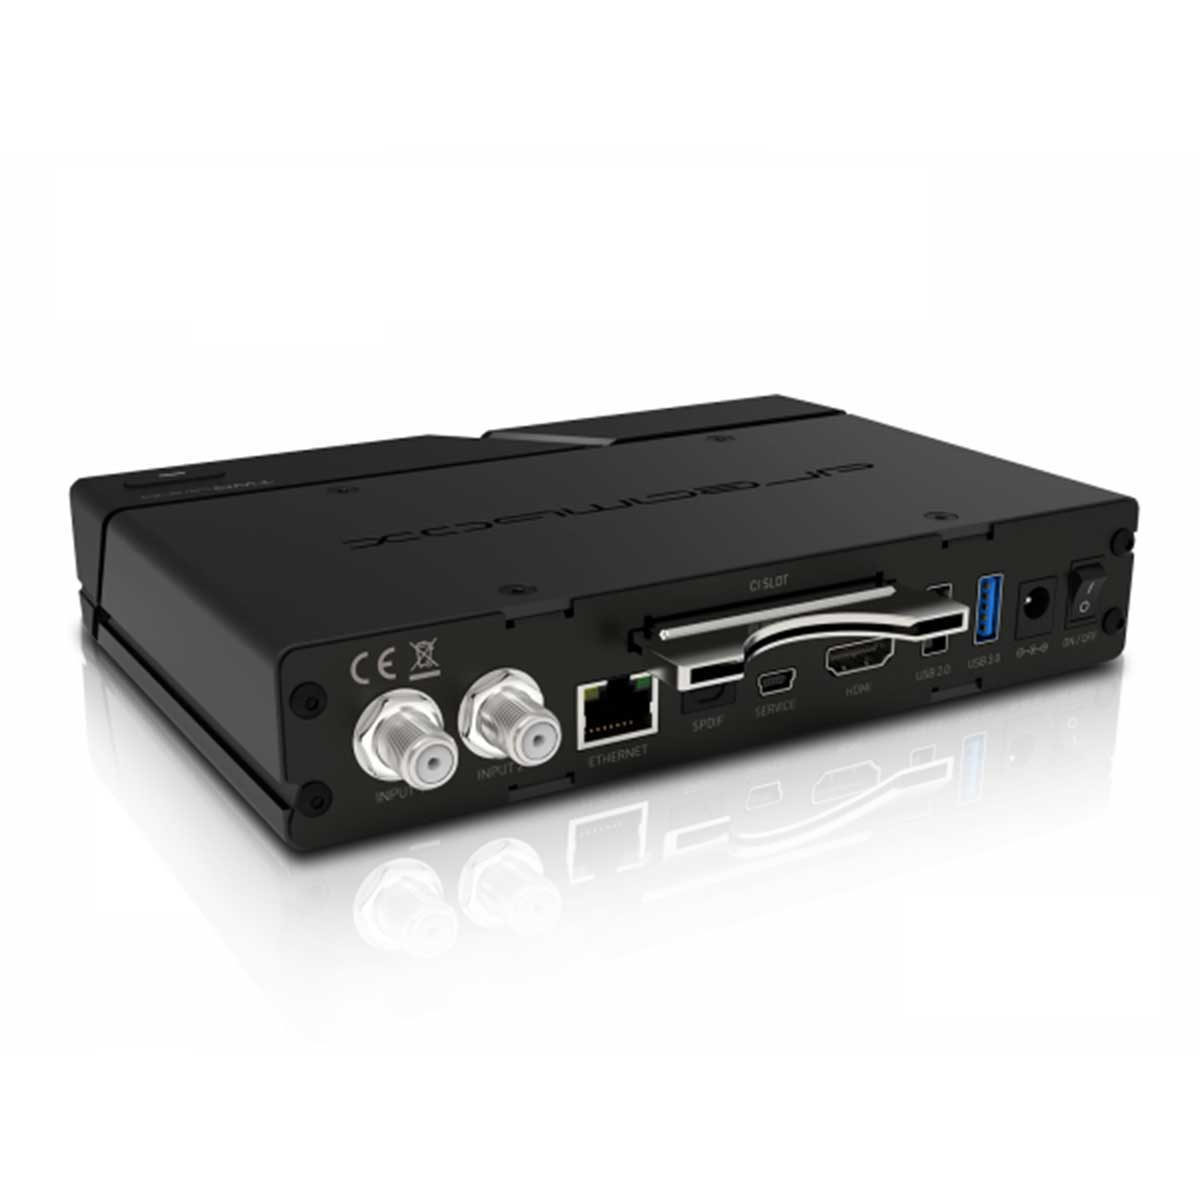 TWO DREAM UltraHD Dreambox (HDTV, schwarz) DVB-S2, PVR-Funktion=optional, MULTIMEDIA Sat-Receiver